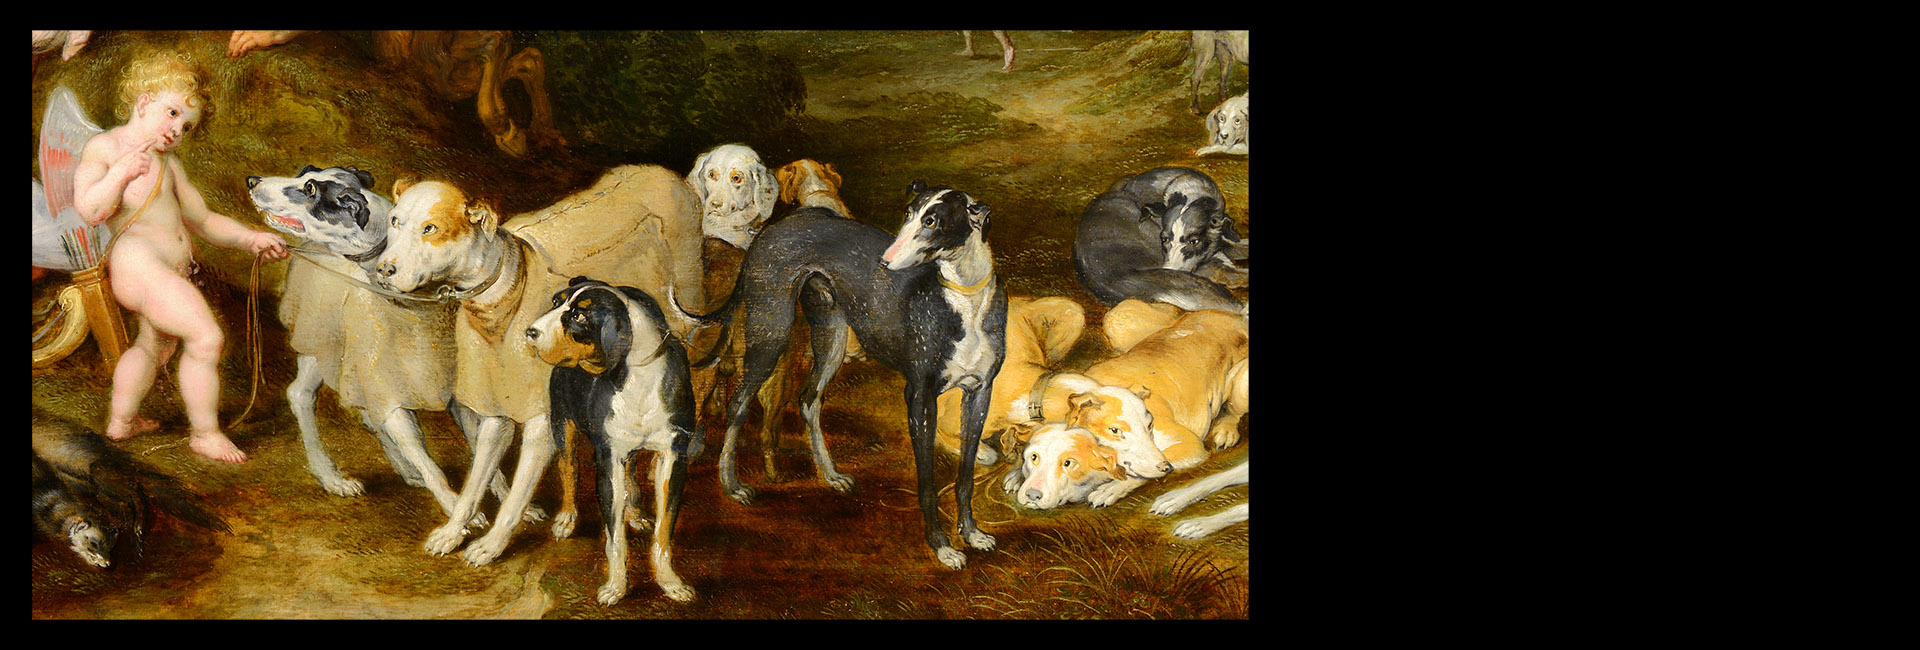 Jan II. Brueghel (1601-1678) [SLEEPING DIANA AND NYMPHS]